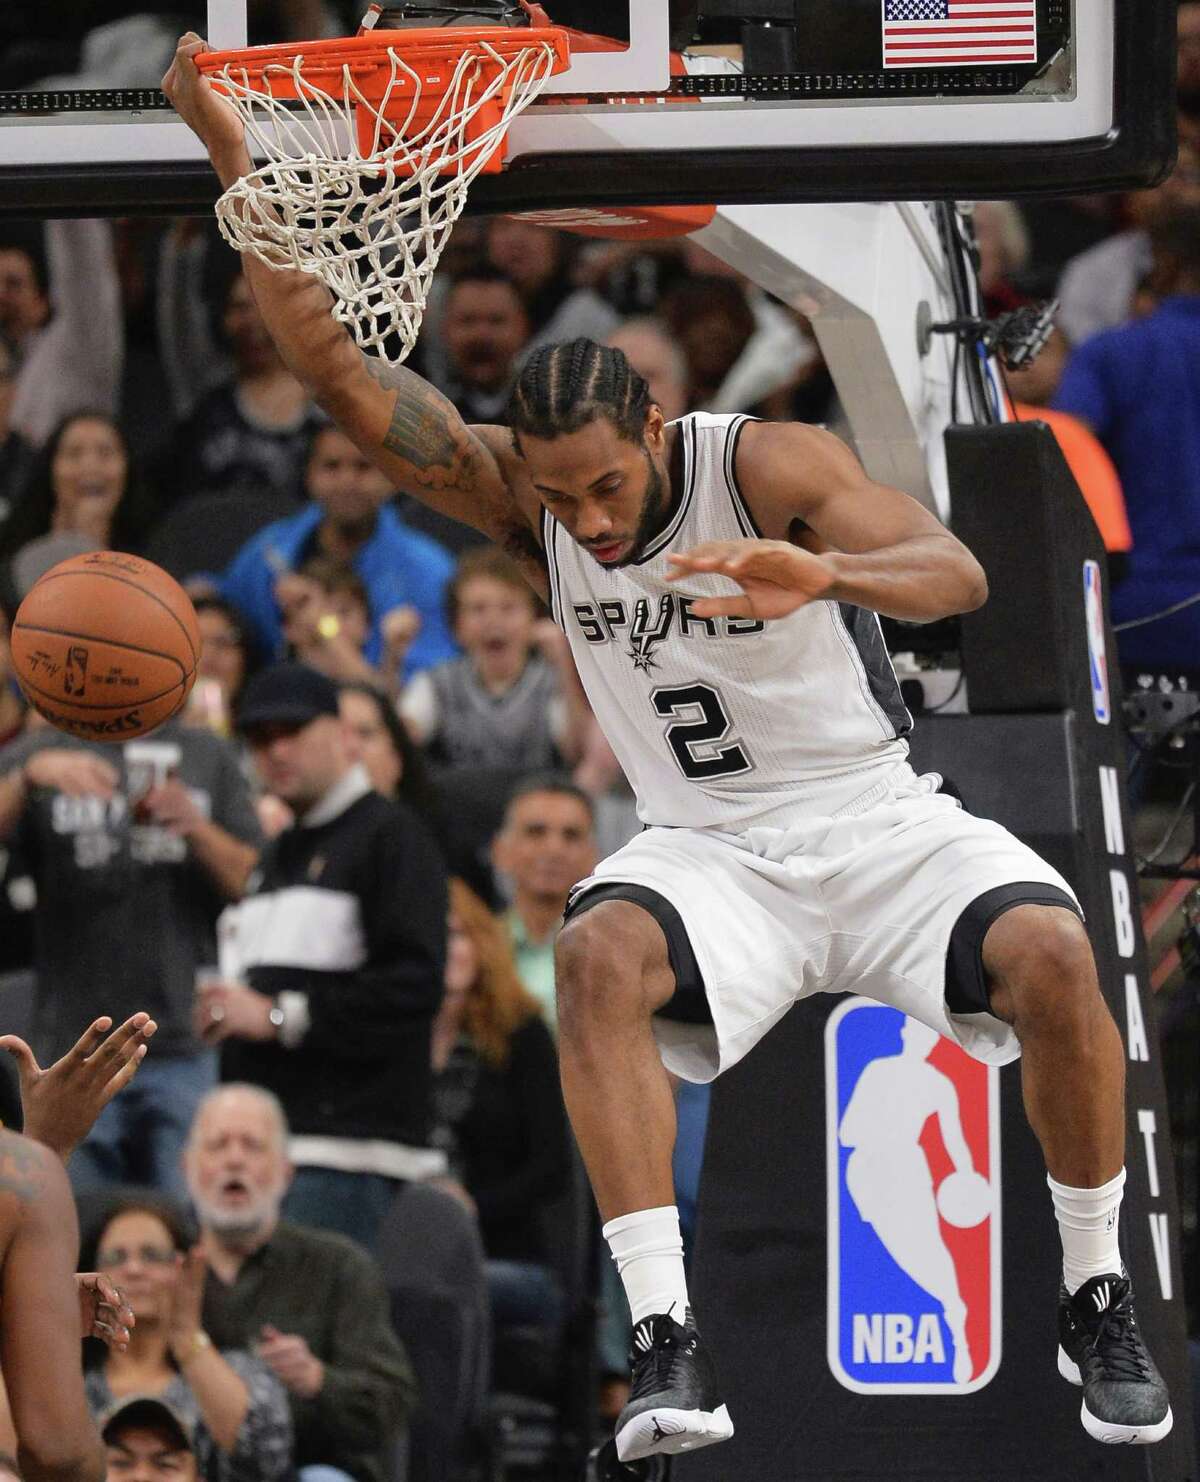 San Antonio Spurs forward Kawhi Leonard dunks during the first half of an NBA basketball game against the Cleveland Cavaliers, Thursday, Jan. 14, 2016, in San Antonio. (AP Photo/Darren Abate)